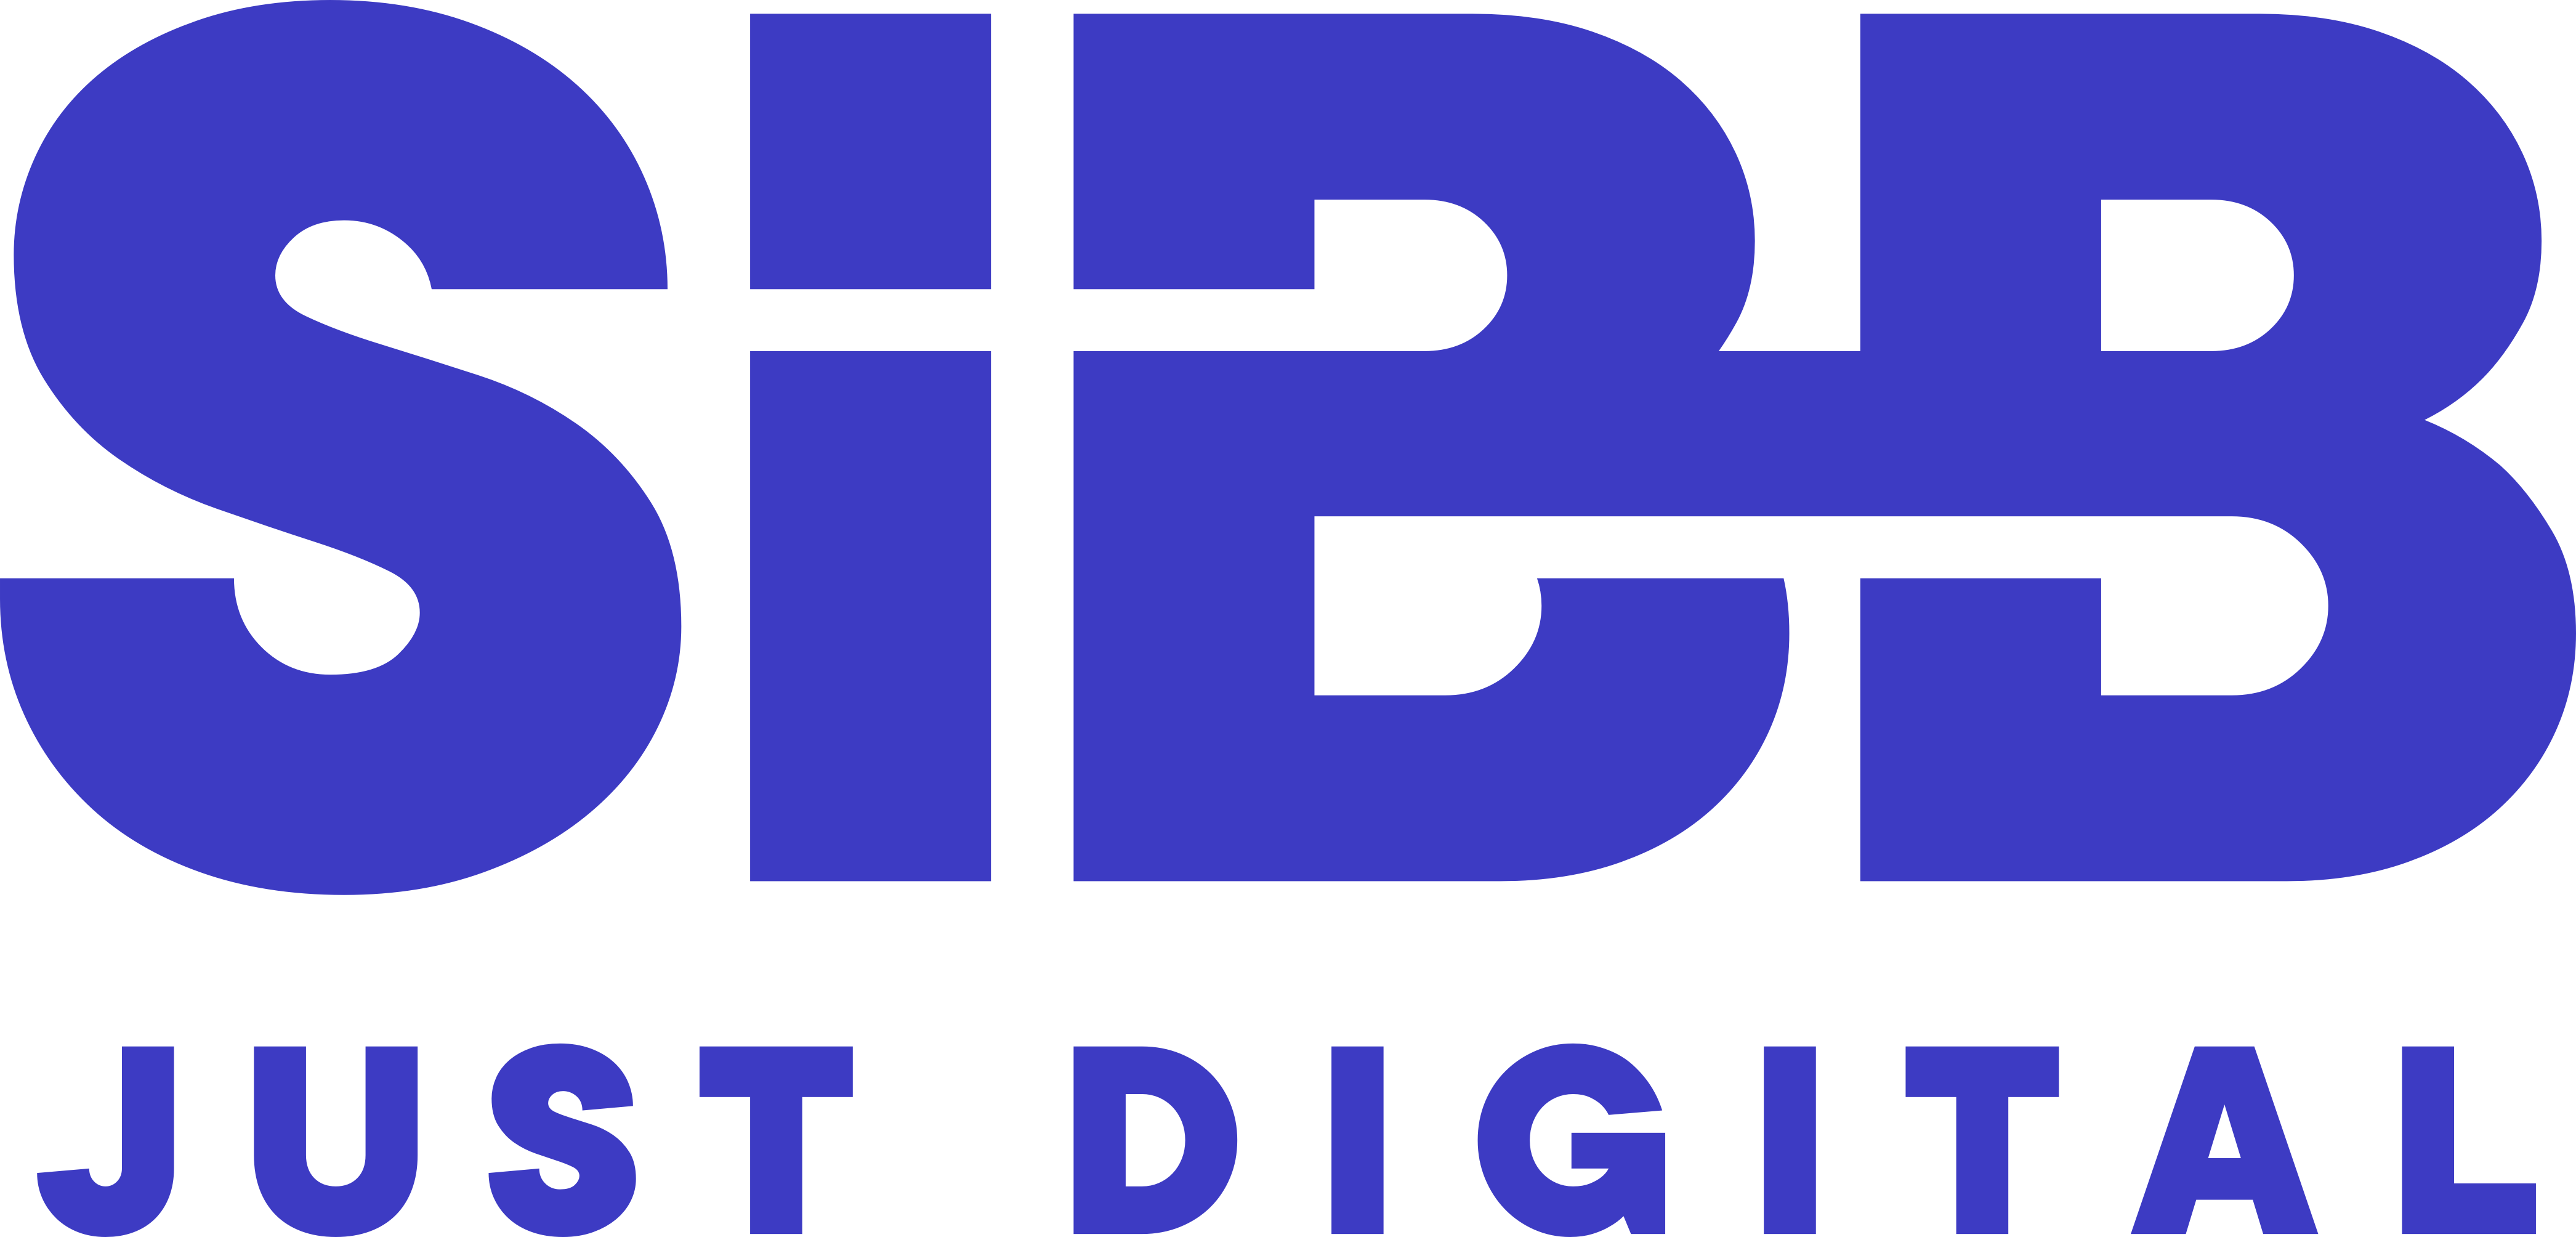 sibb logo tagline 1